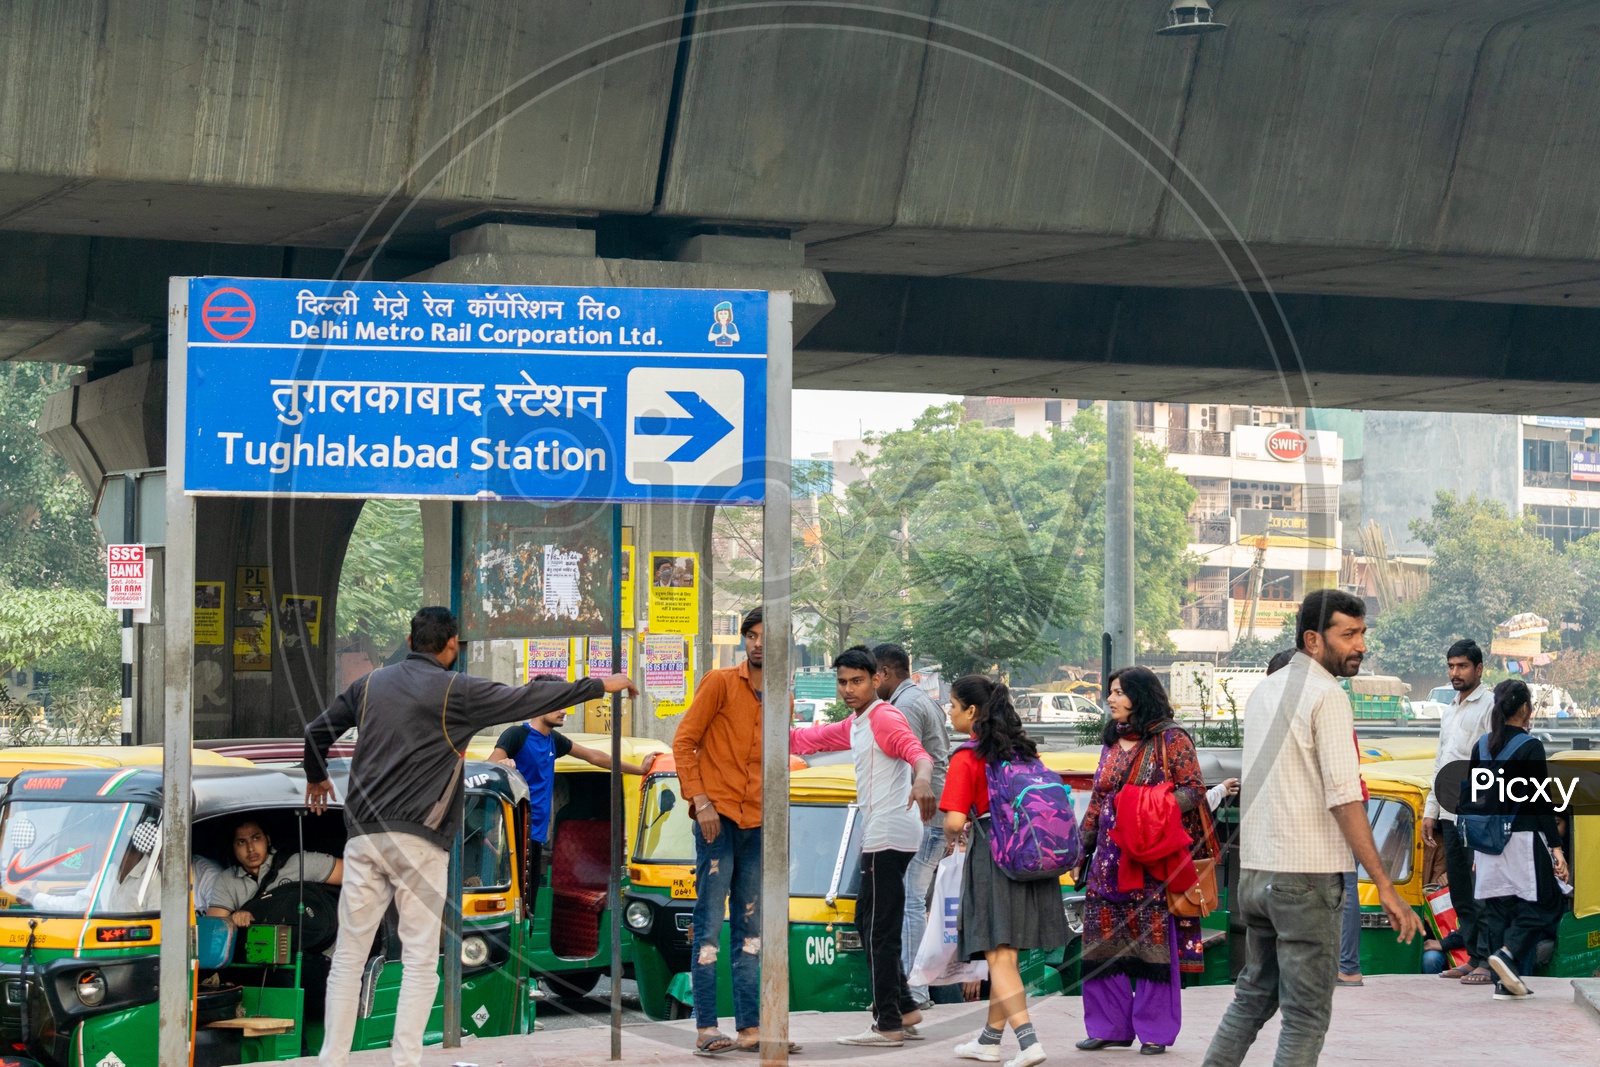 Tughlakabad Metro Station sign board and Auto rickshaw drivers calling the passengers